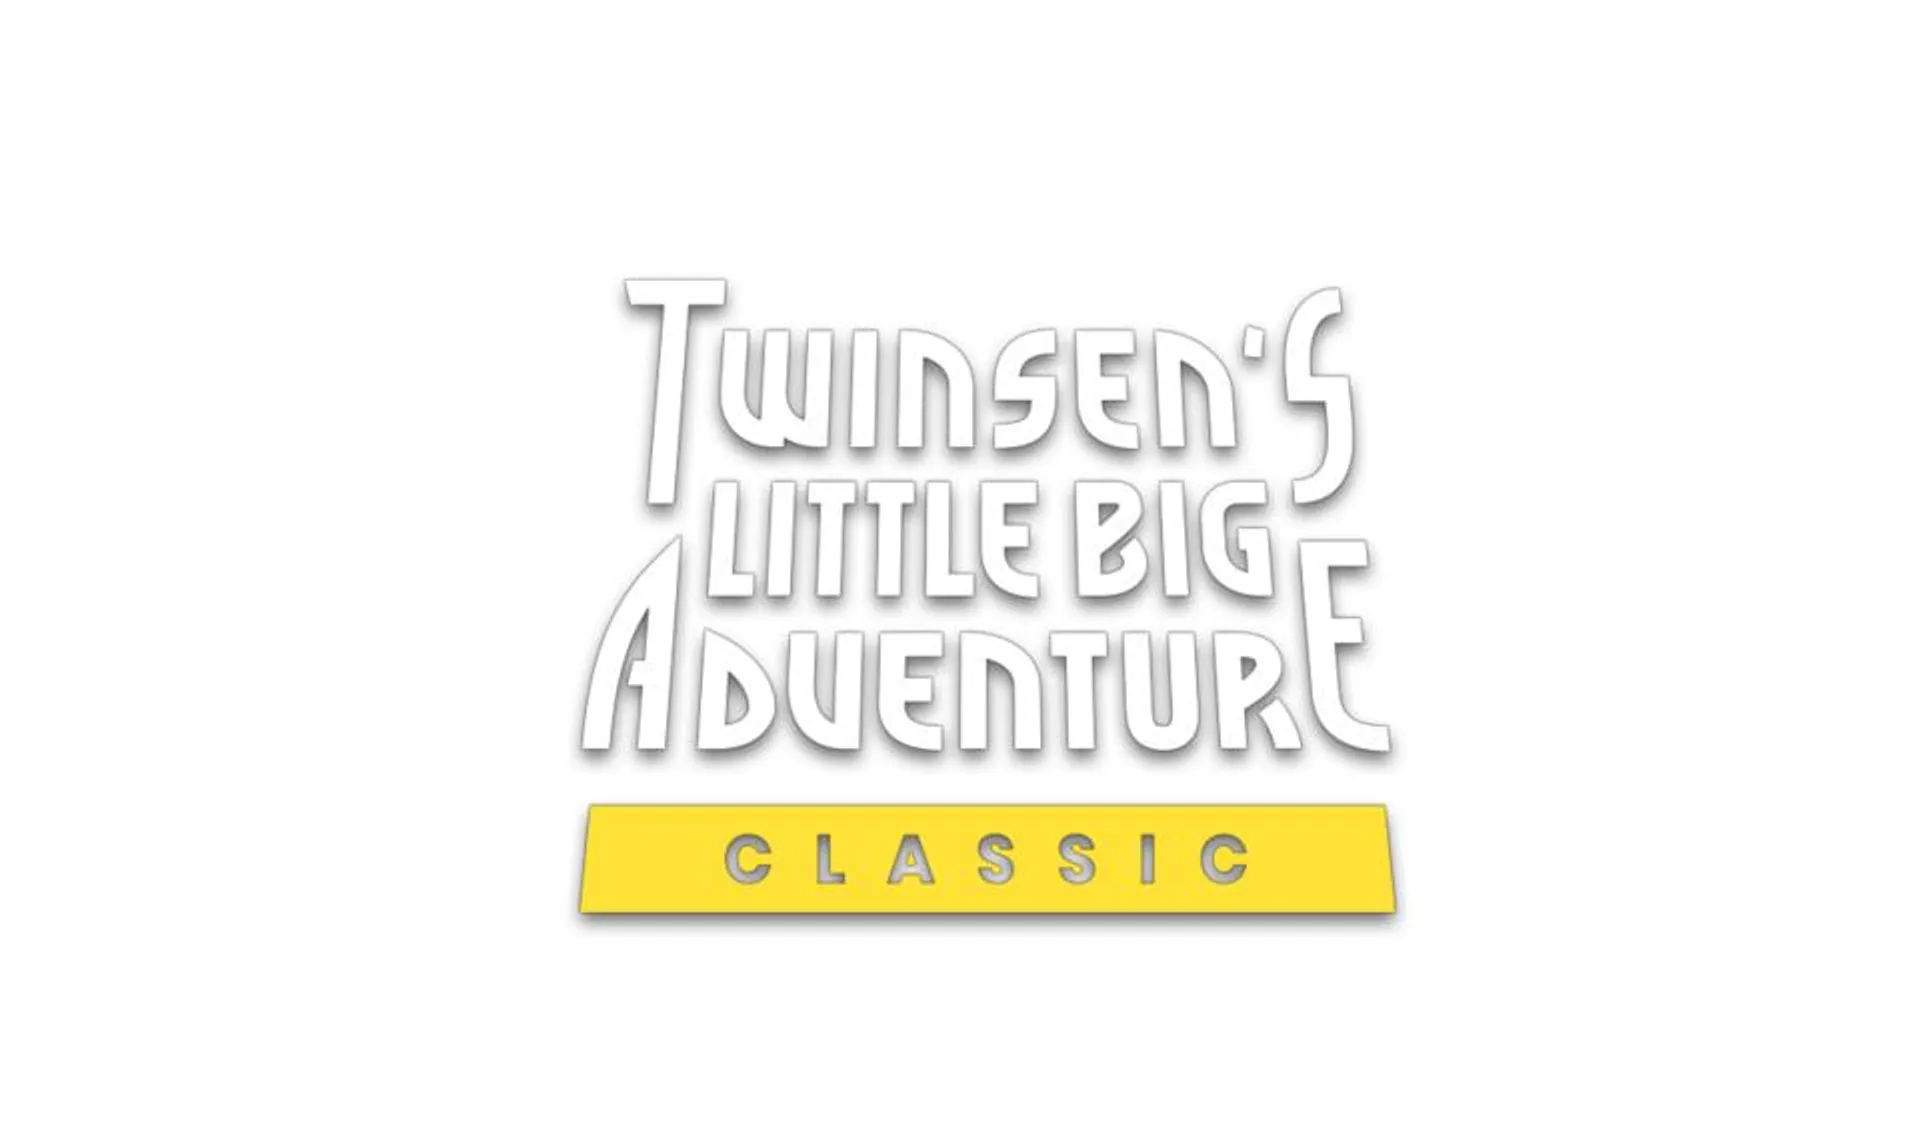 Twinsen's Little Big Adventure Classic